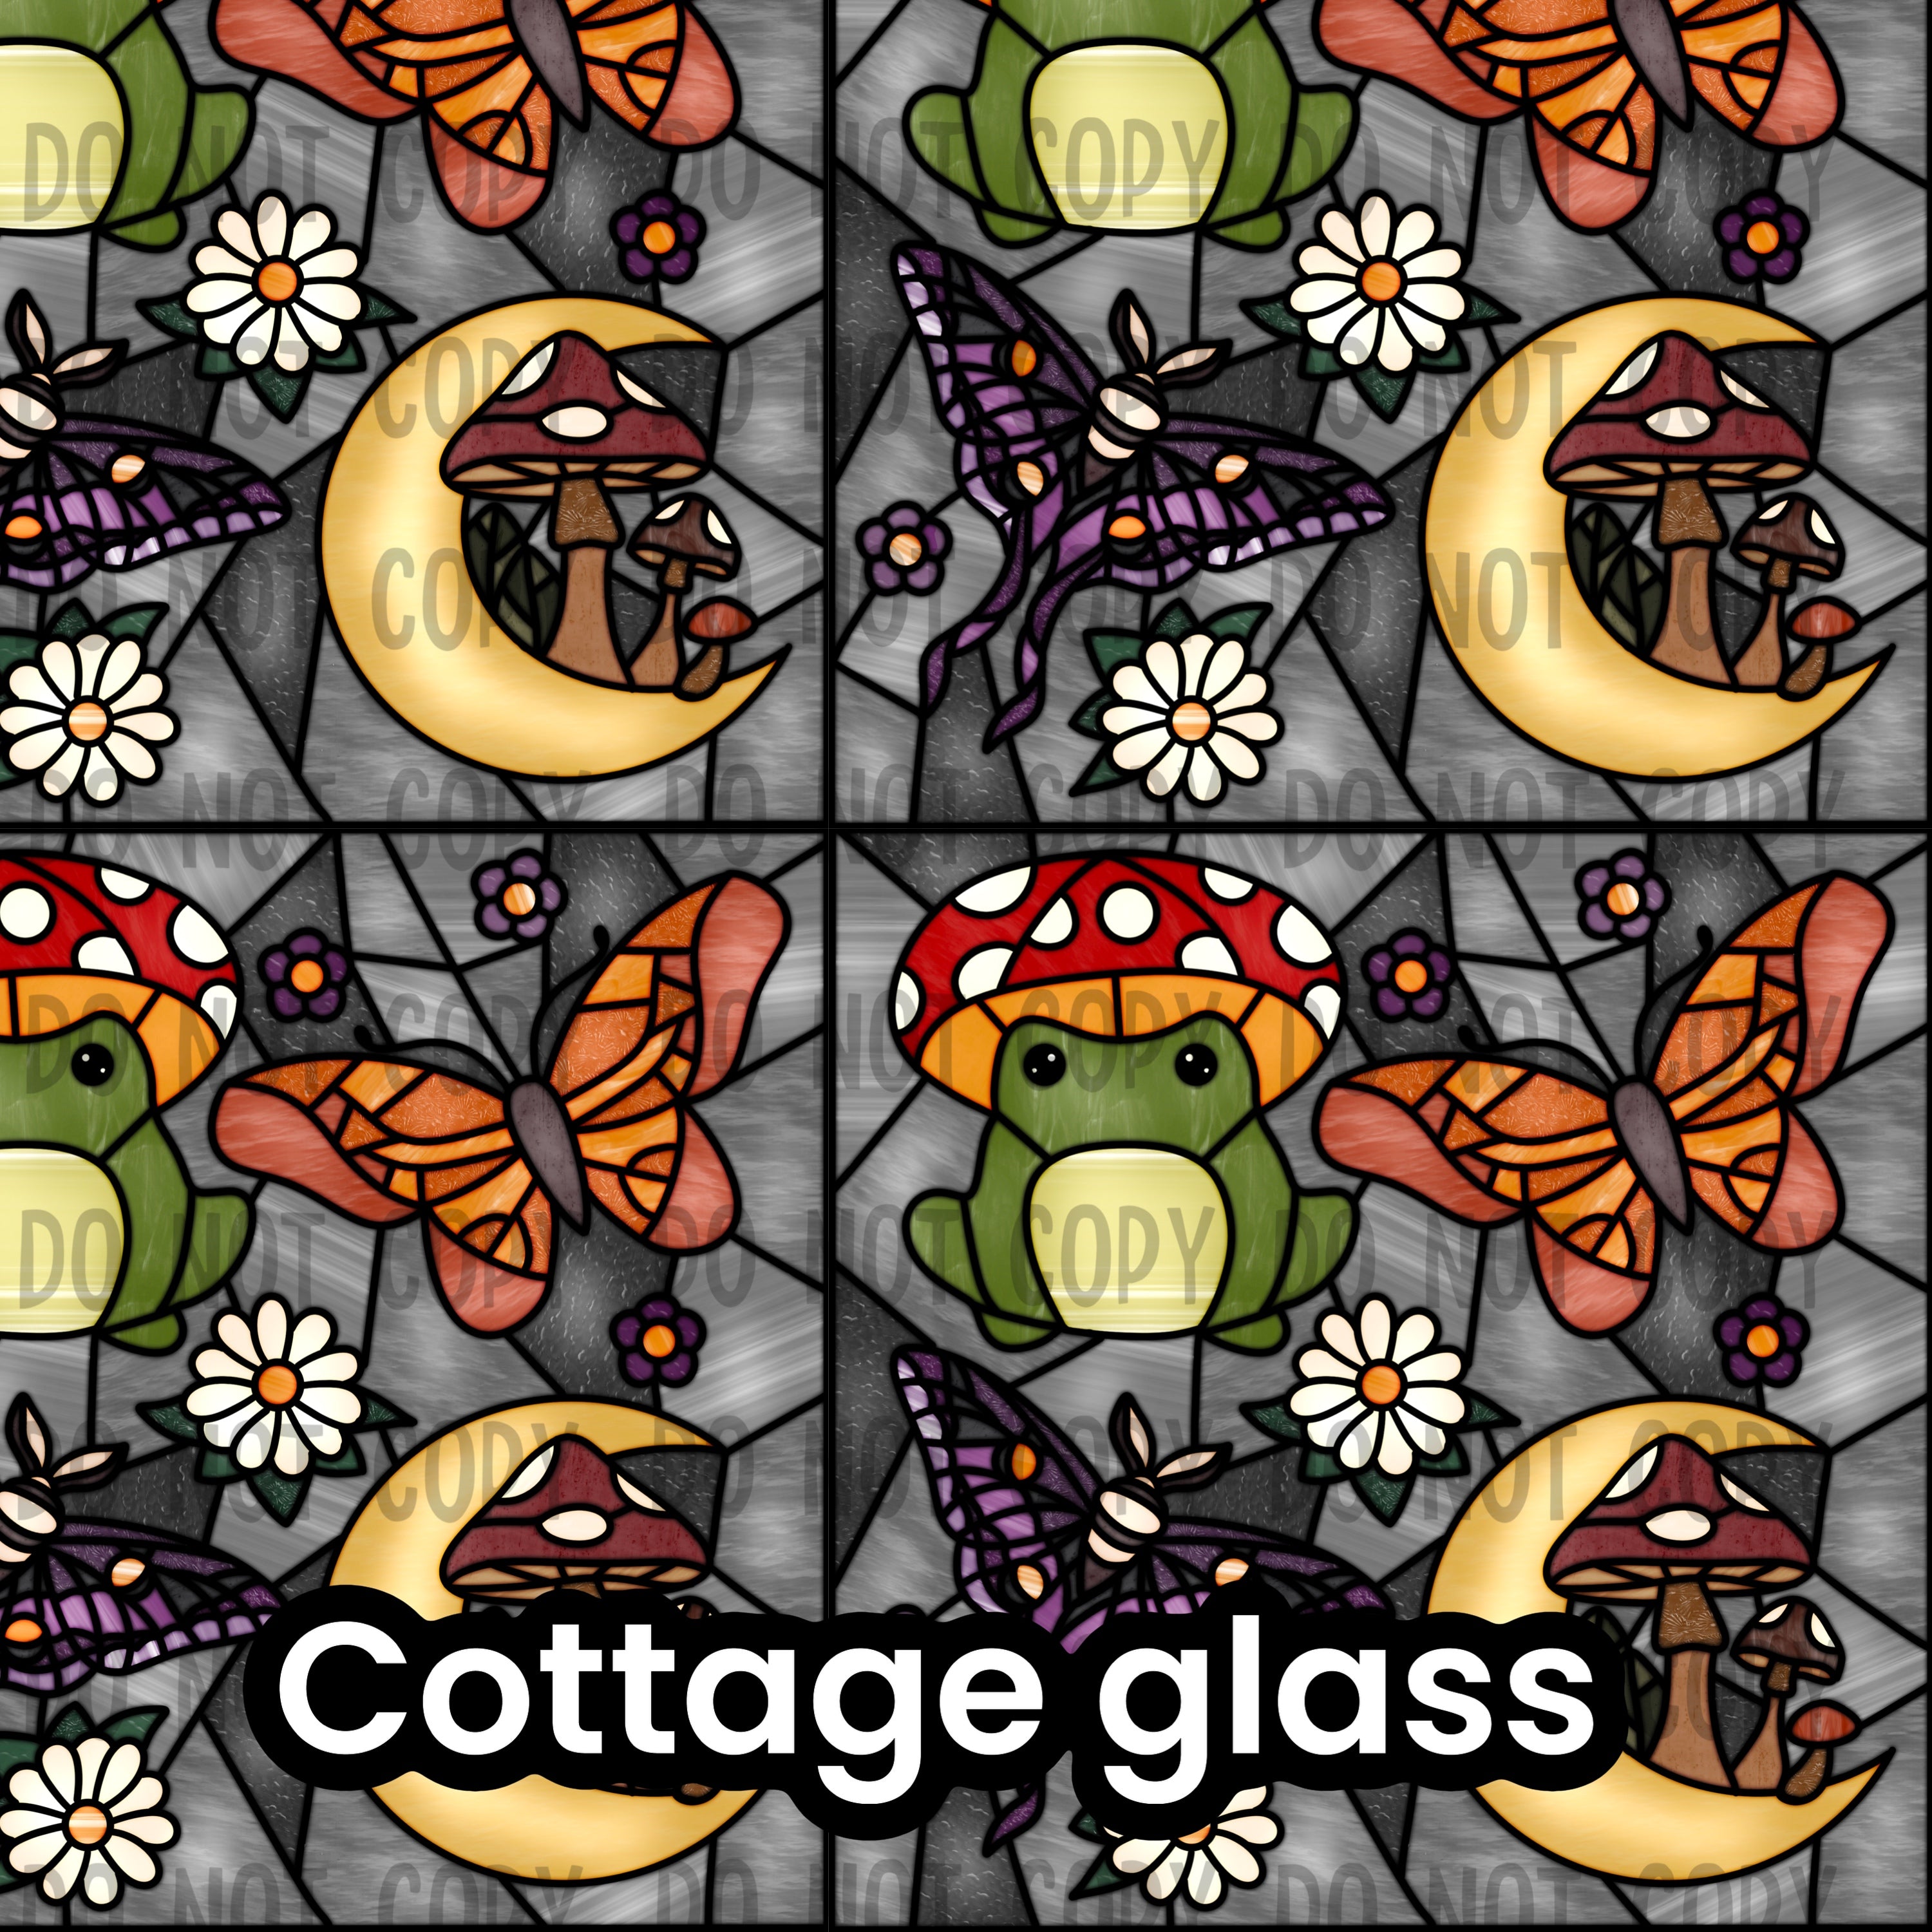 Cottage glass